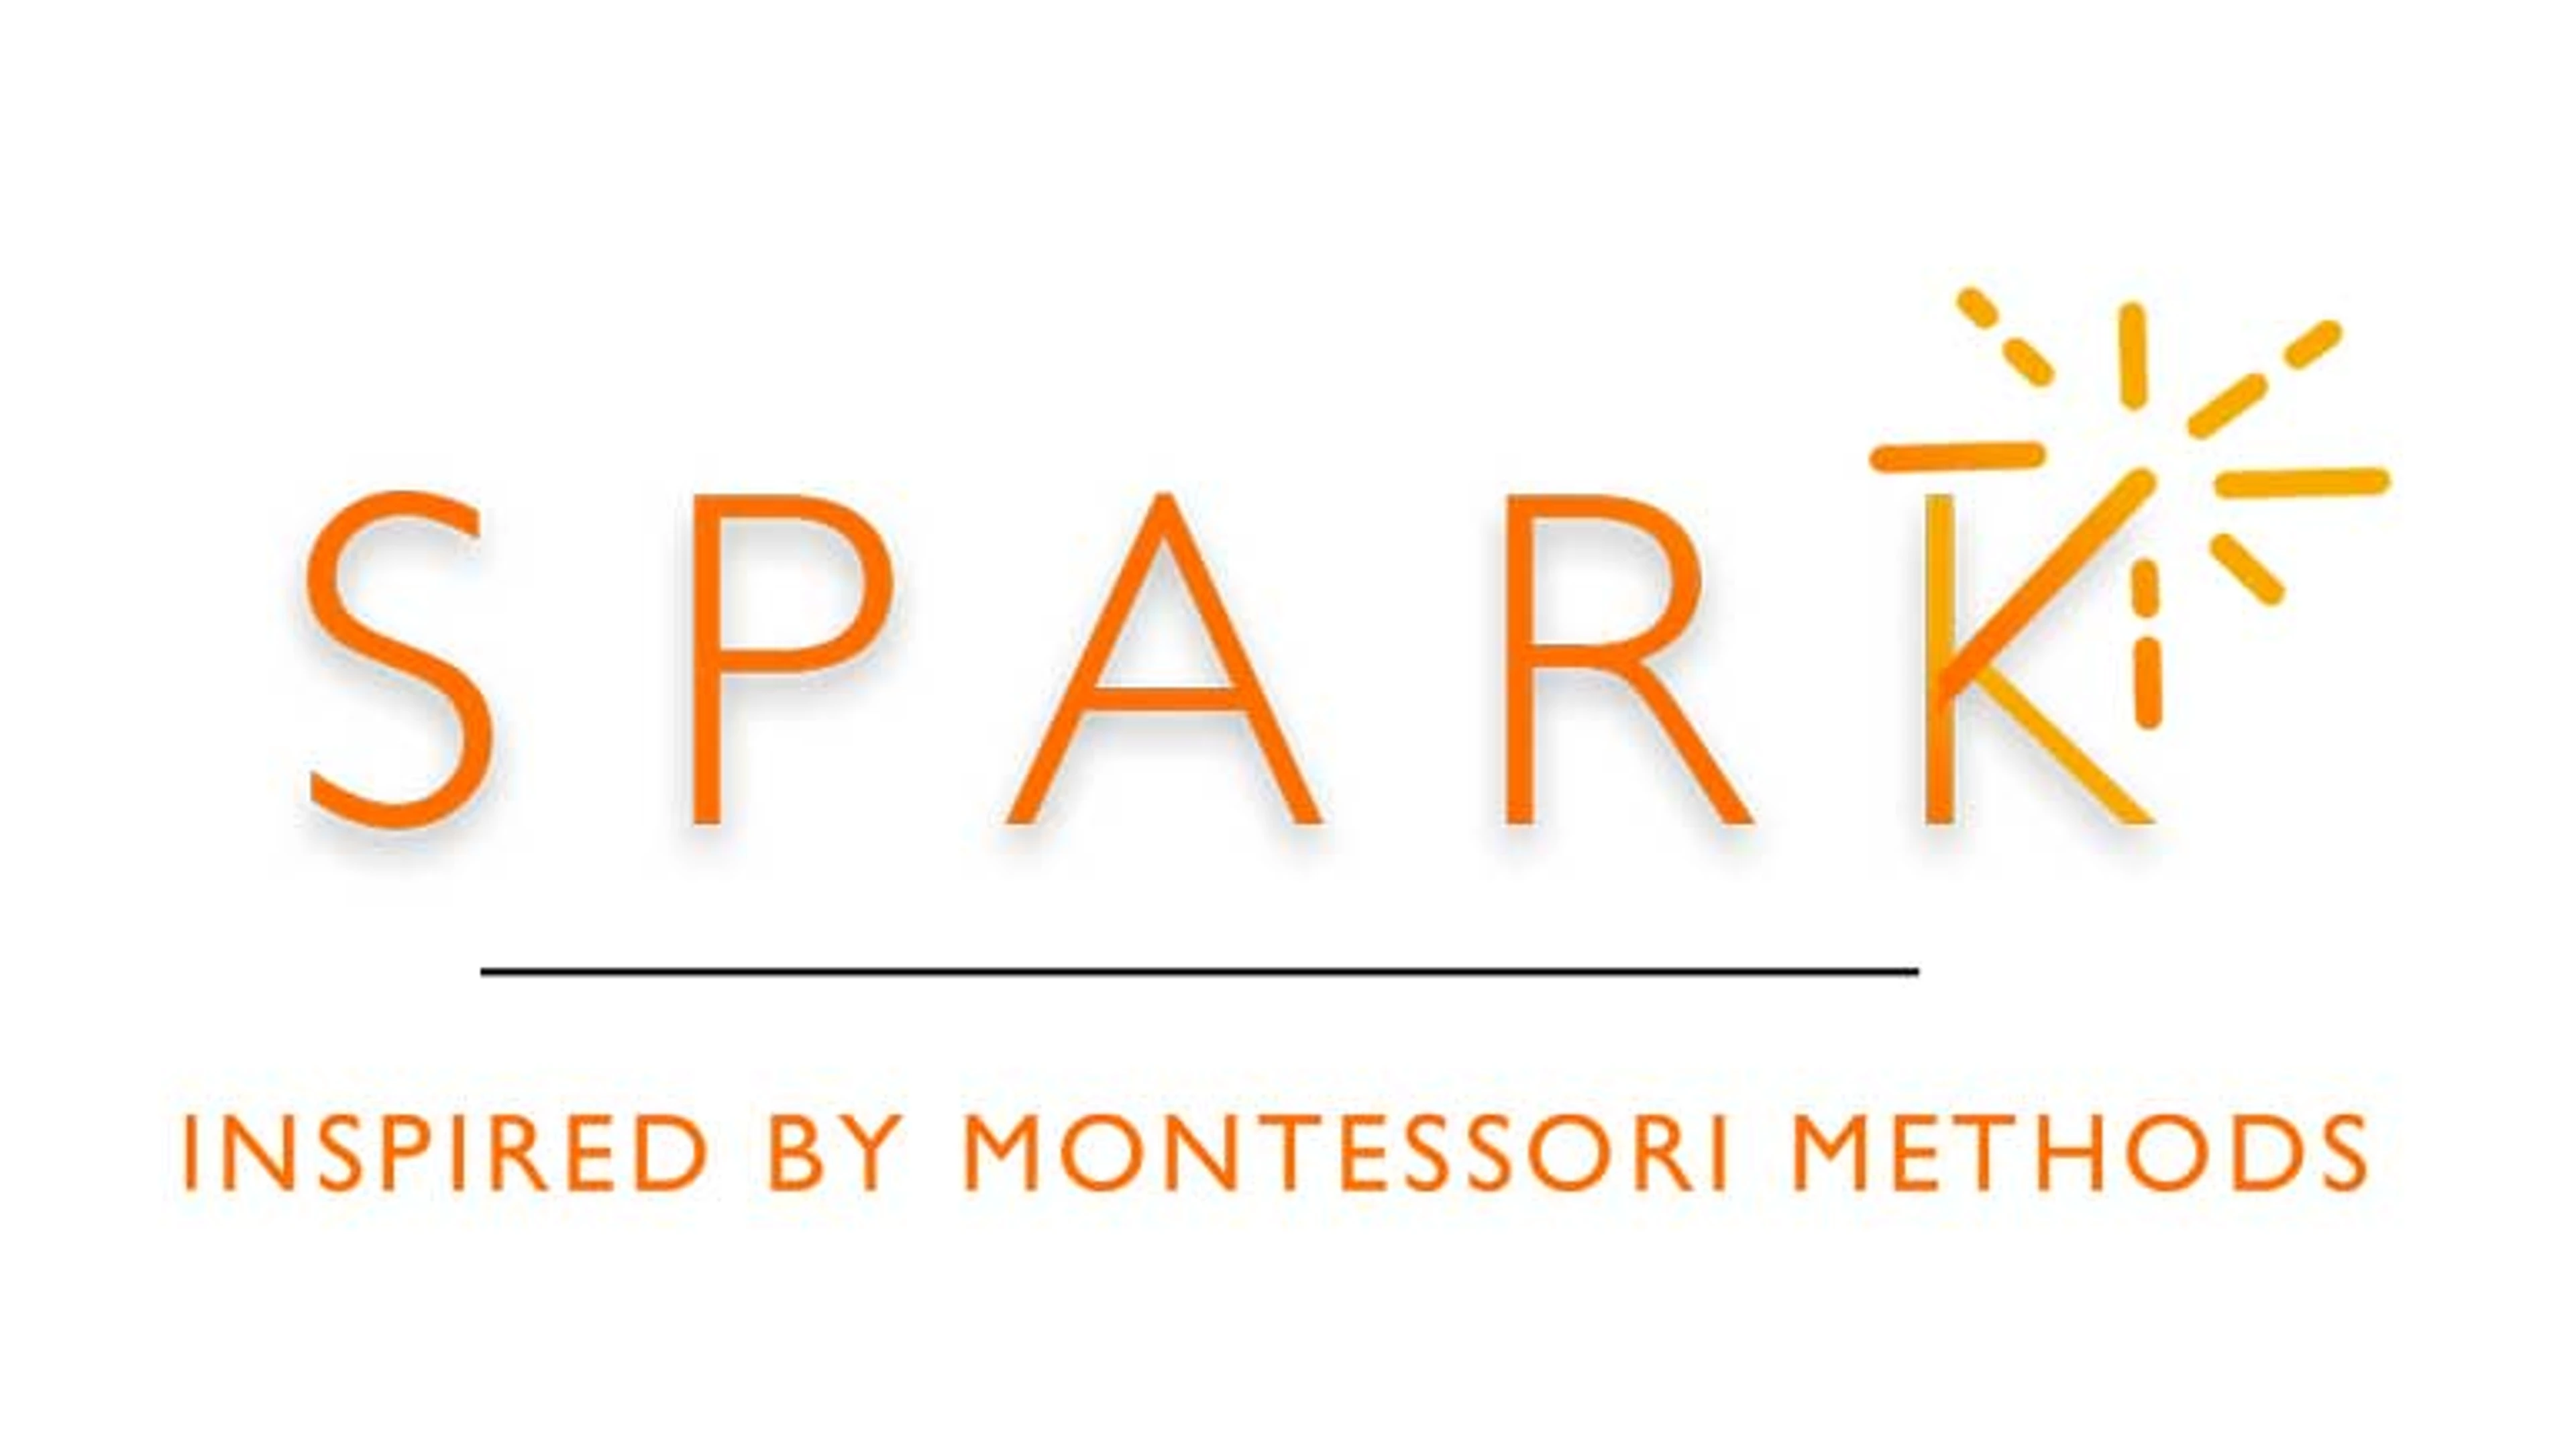 SPARK inspired by Montessori methods